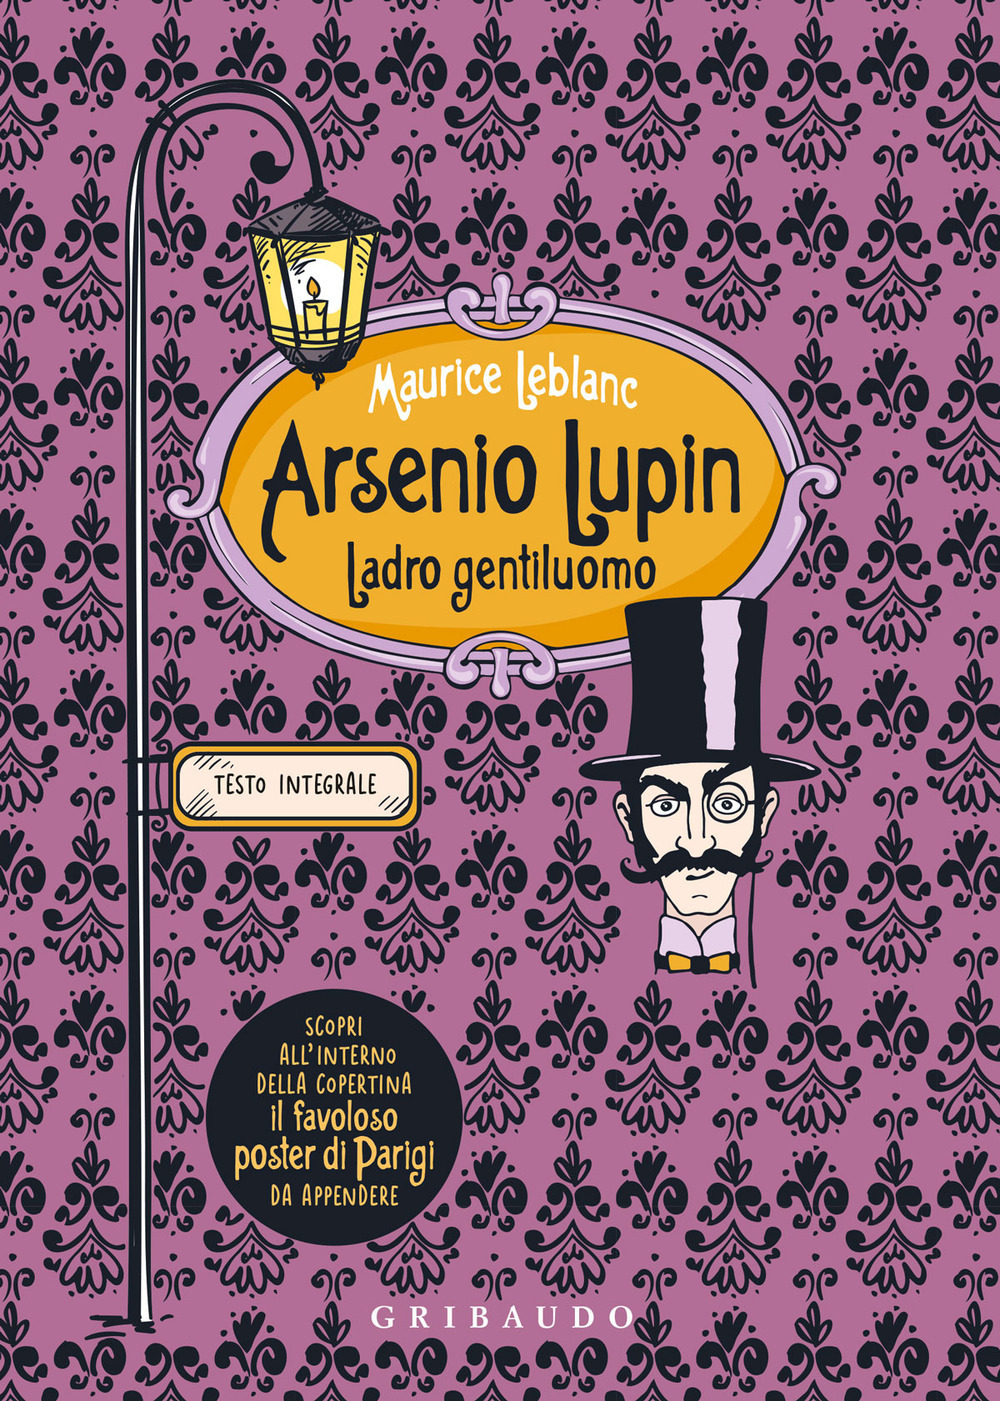 Copertina libro Arsenio Lupin ladro gentiluomo